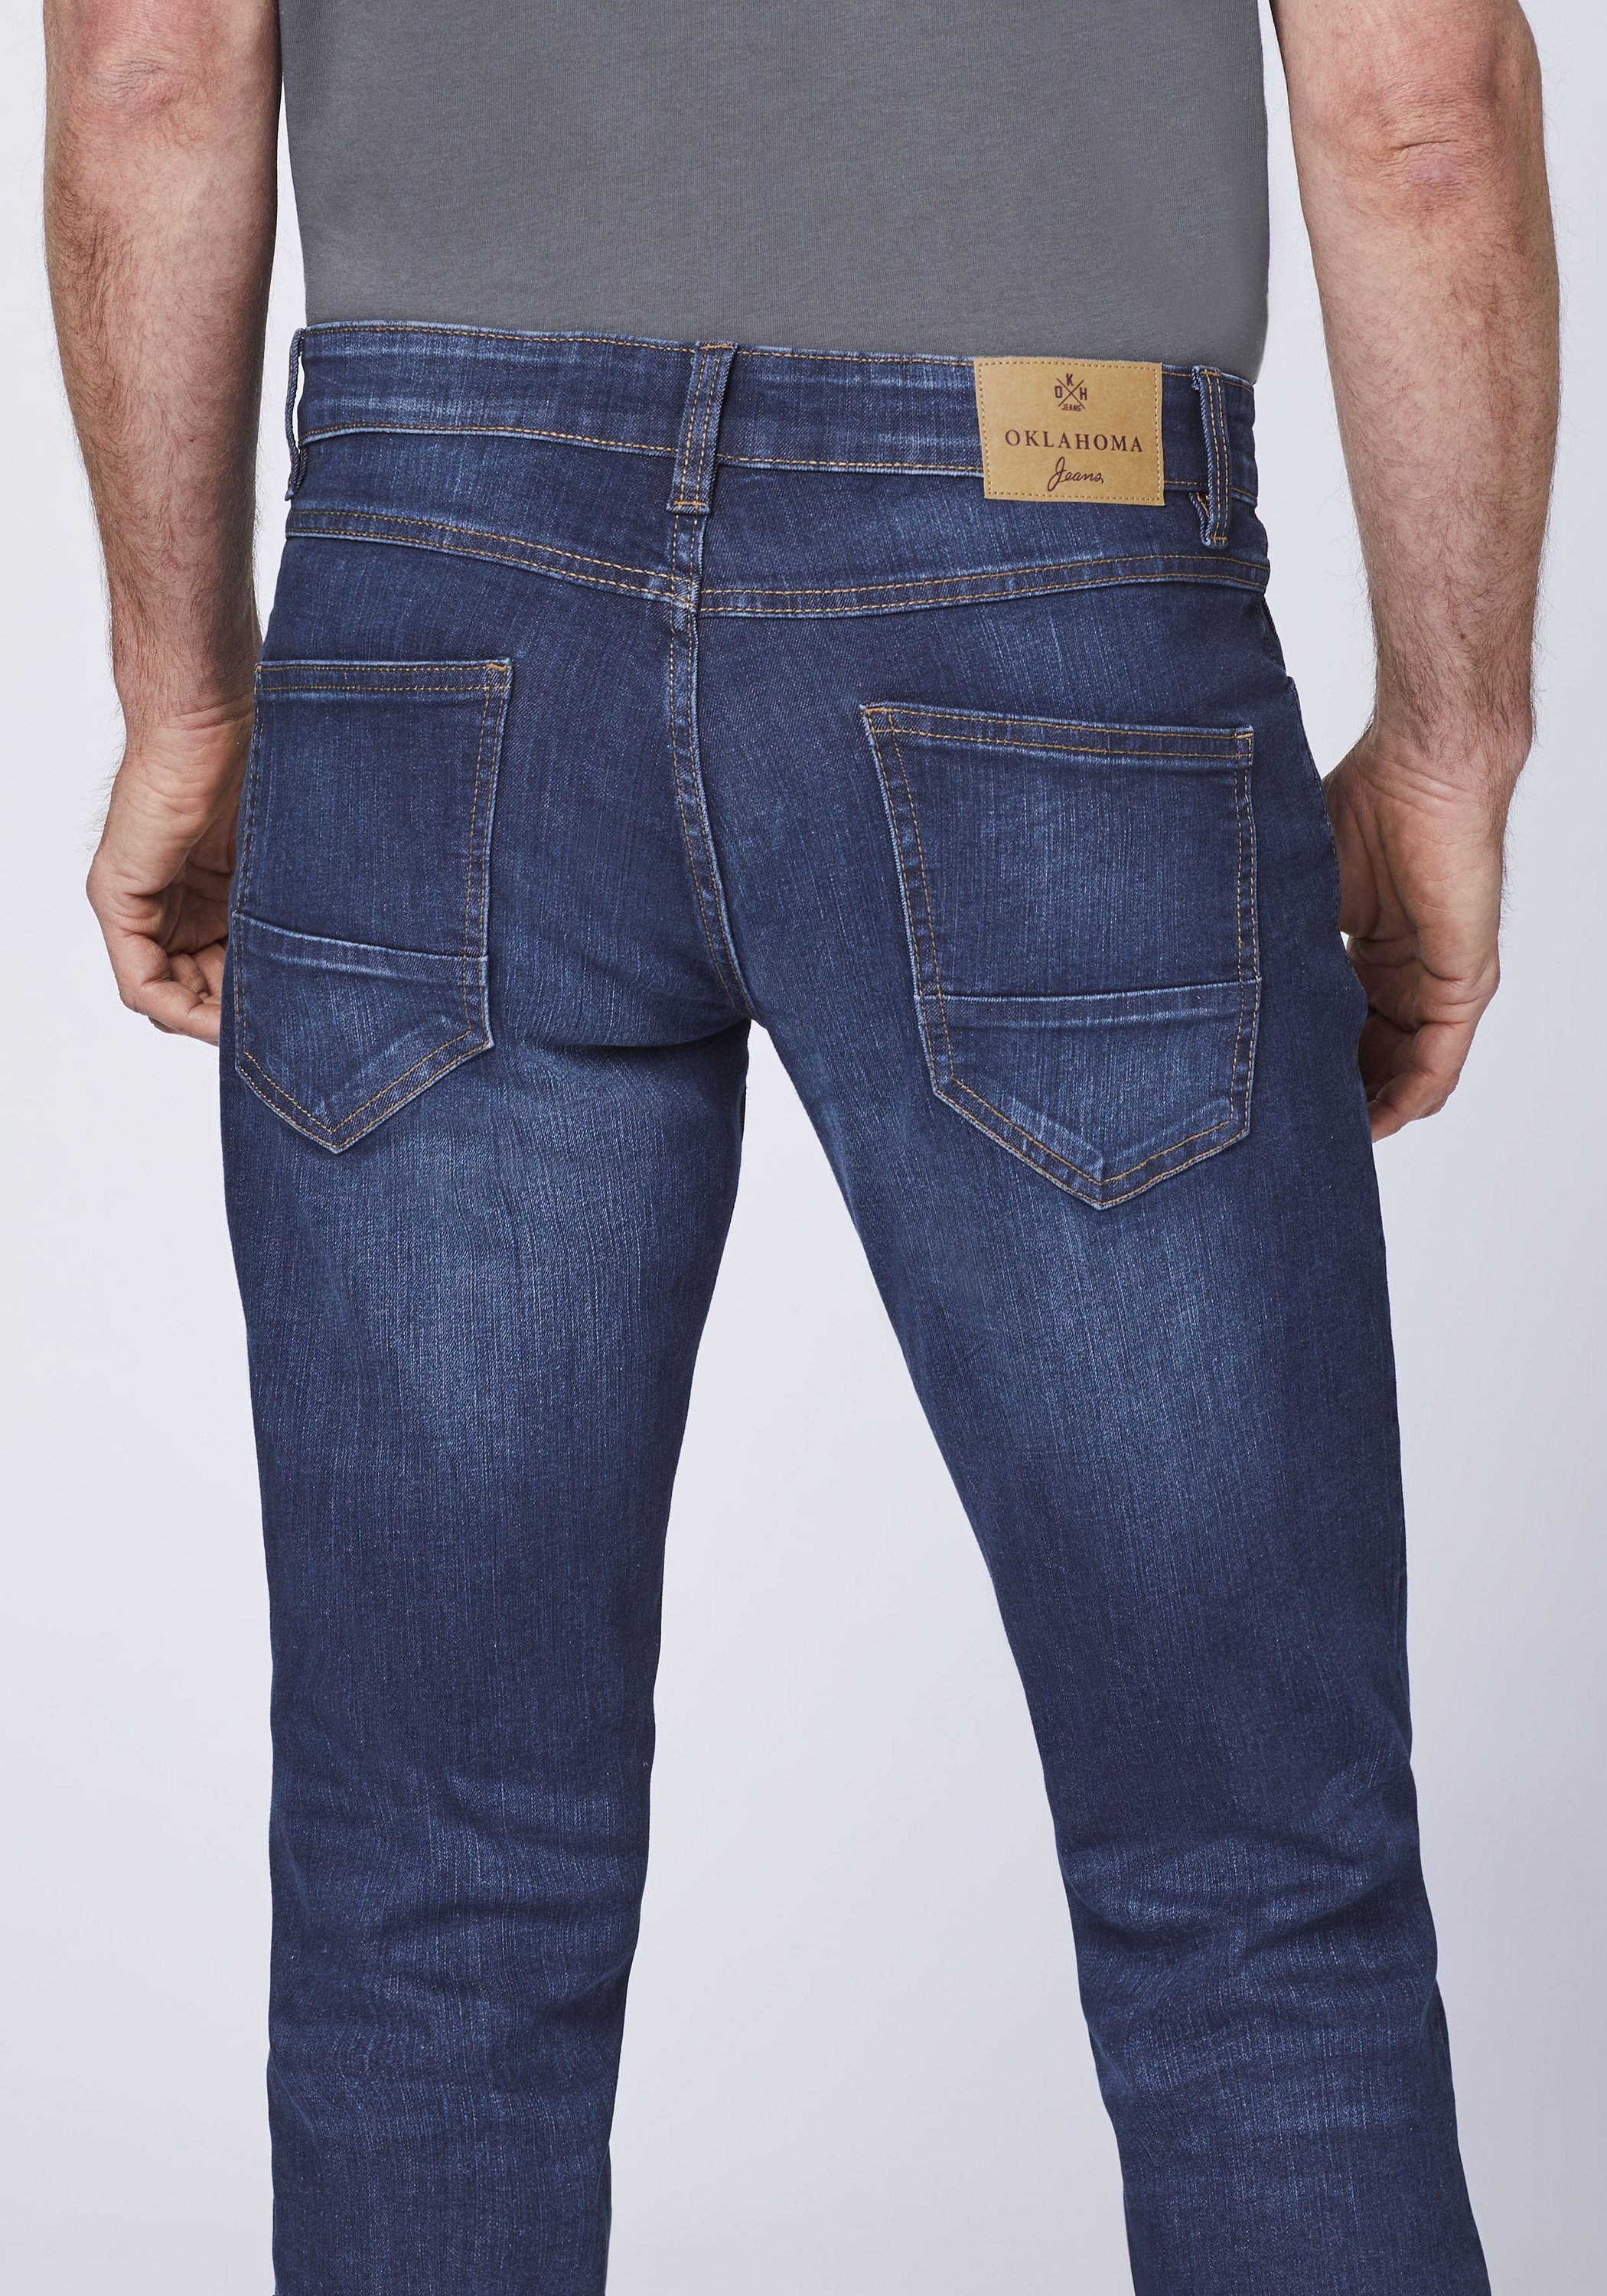 Oklahoma Jeans Slim-fit-Jeans weichem Denim aus